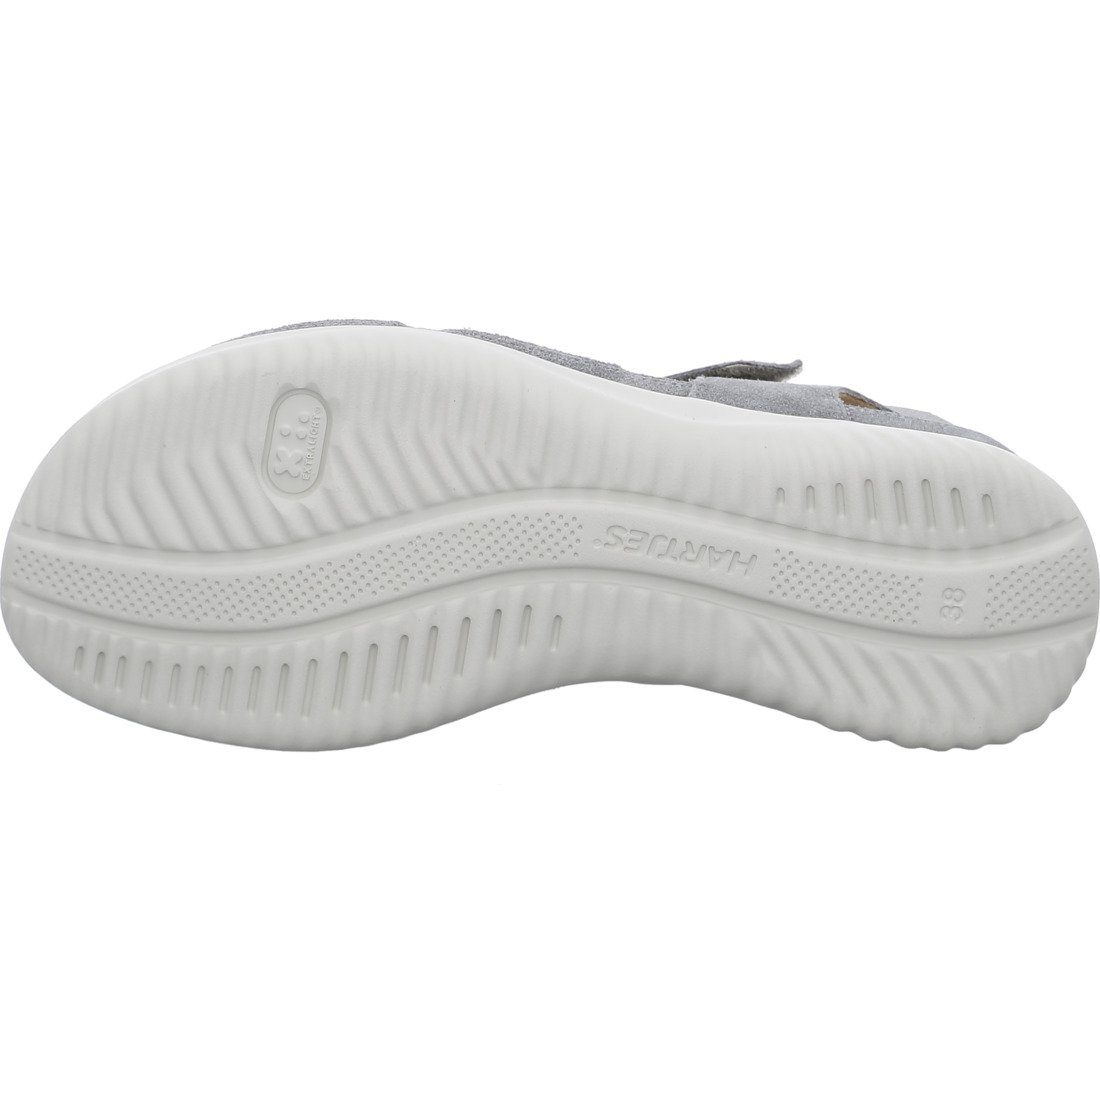 Hartjes Hartjes Schuhe, Sandalette 045743 Sandalette - Breeze grau Velours